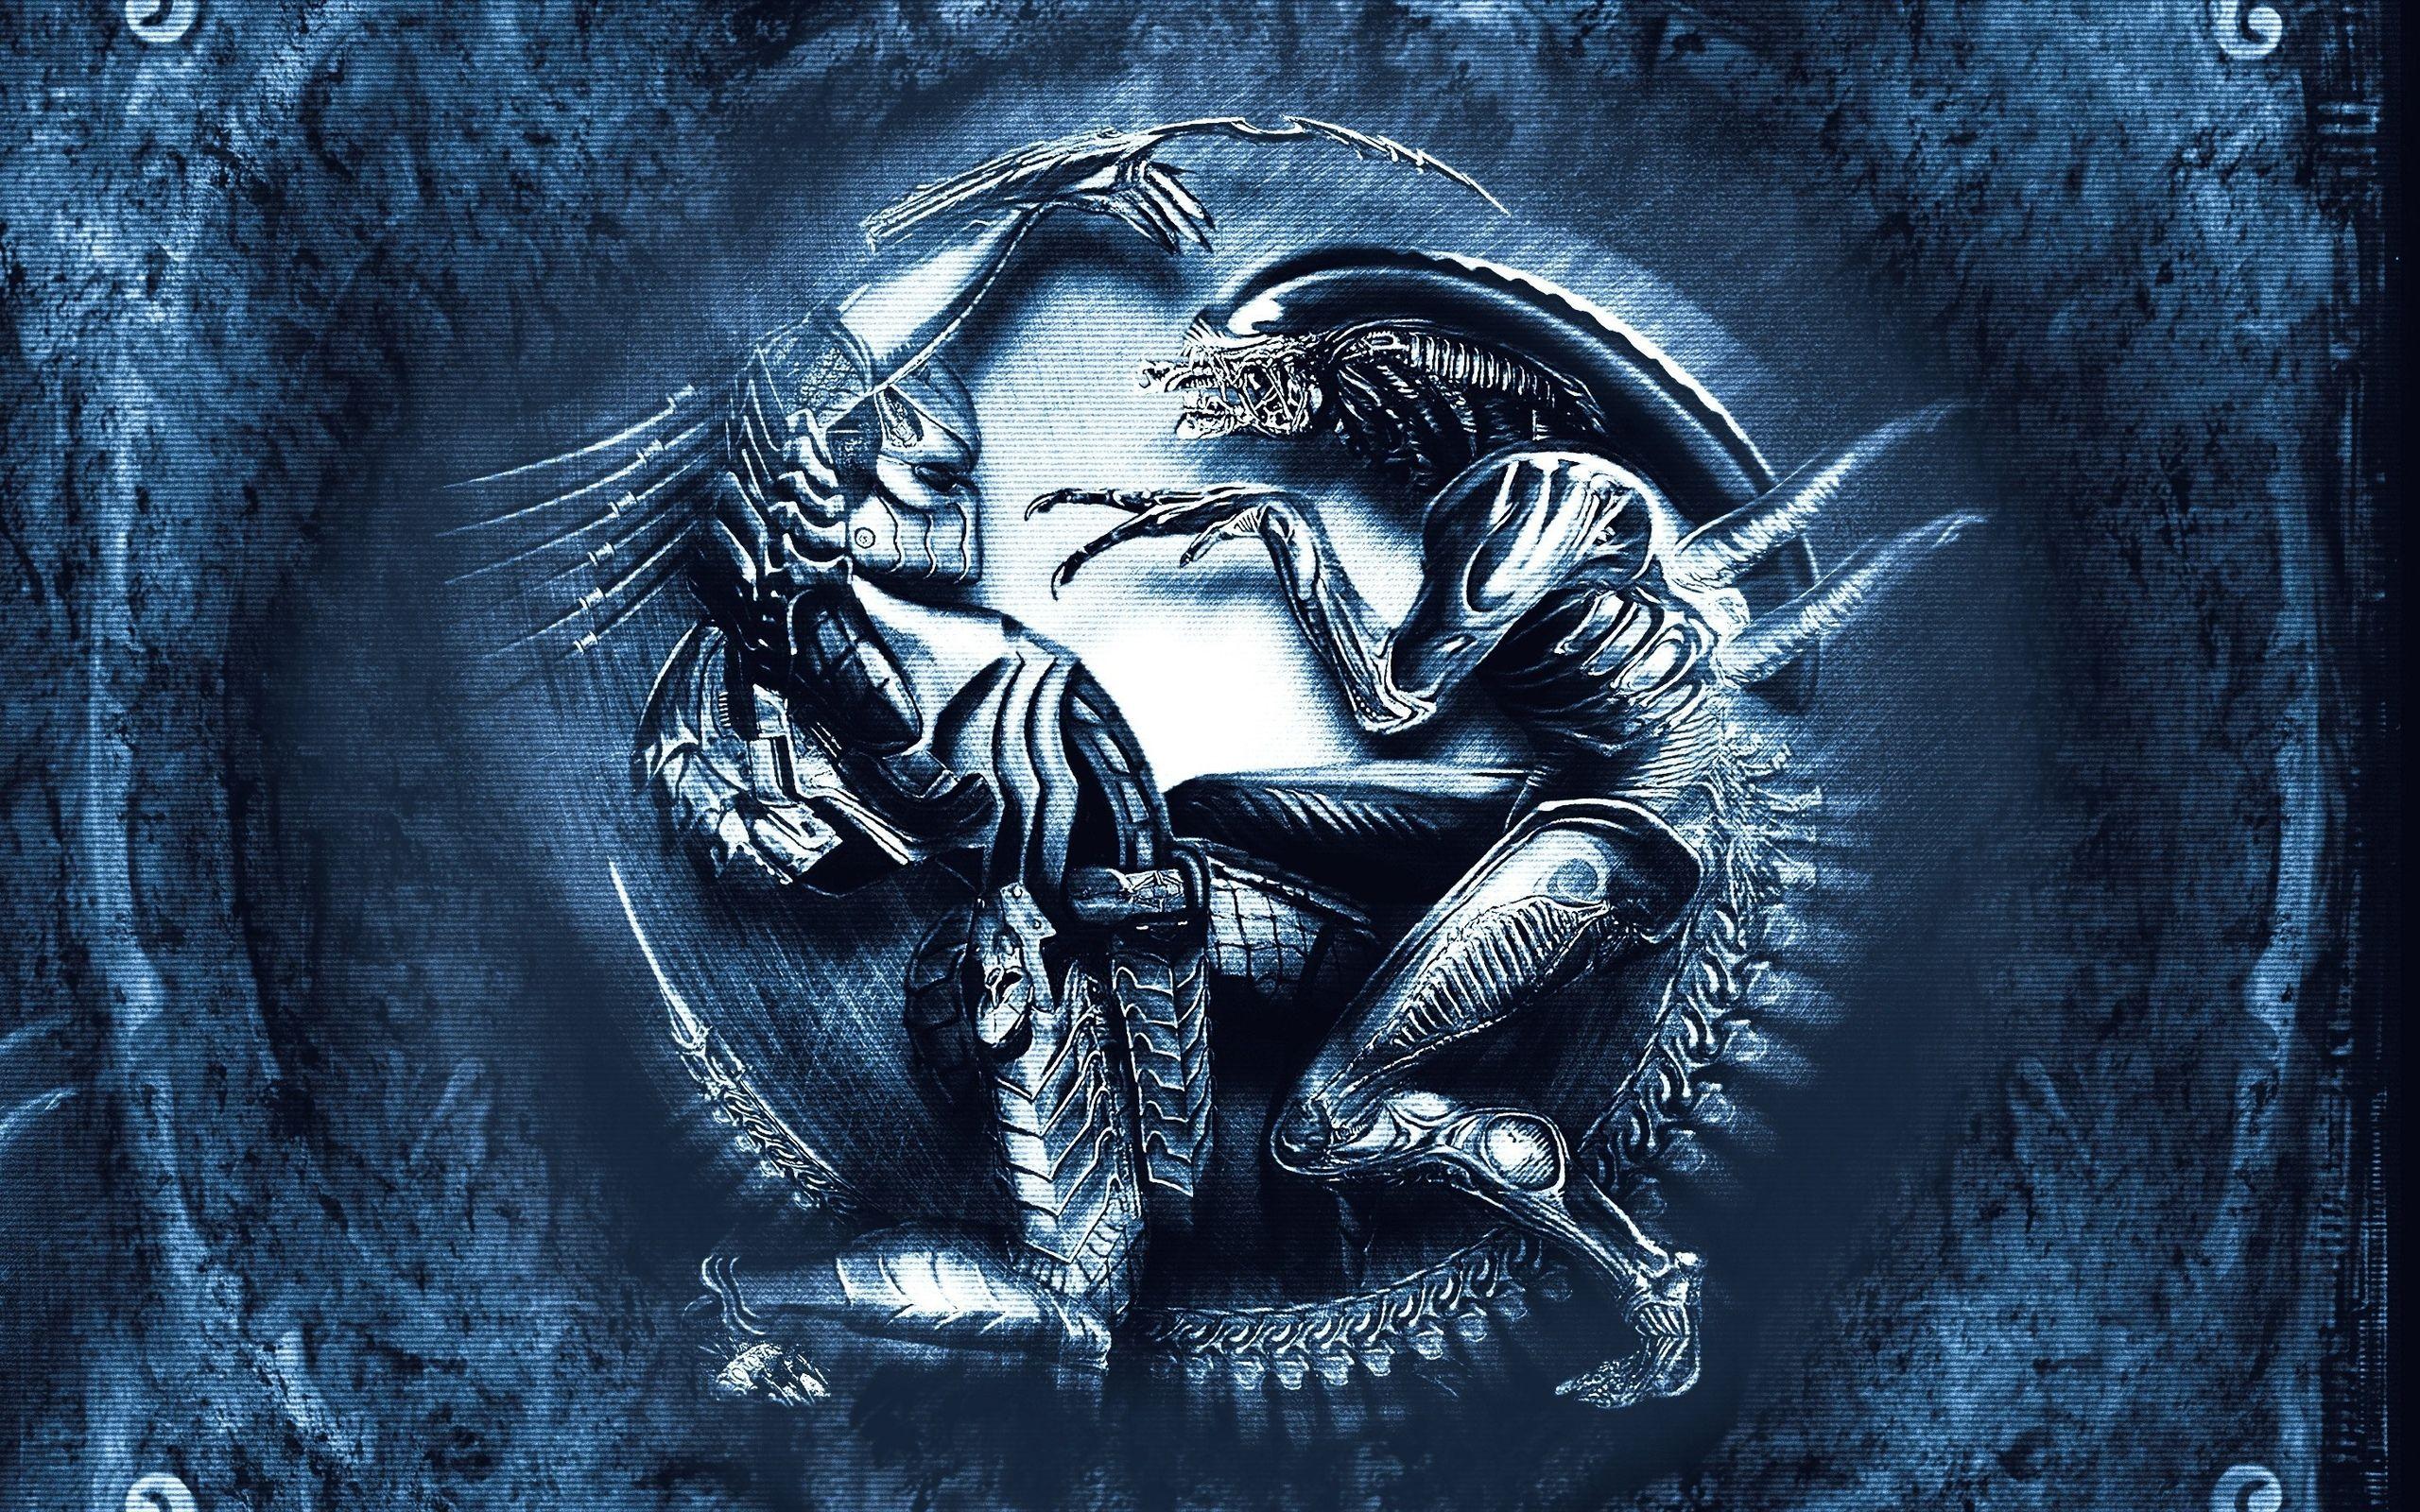 download saga alien vs predator